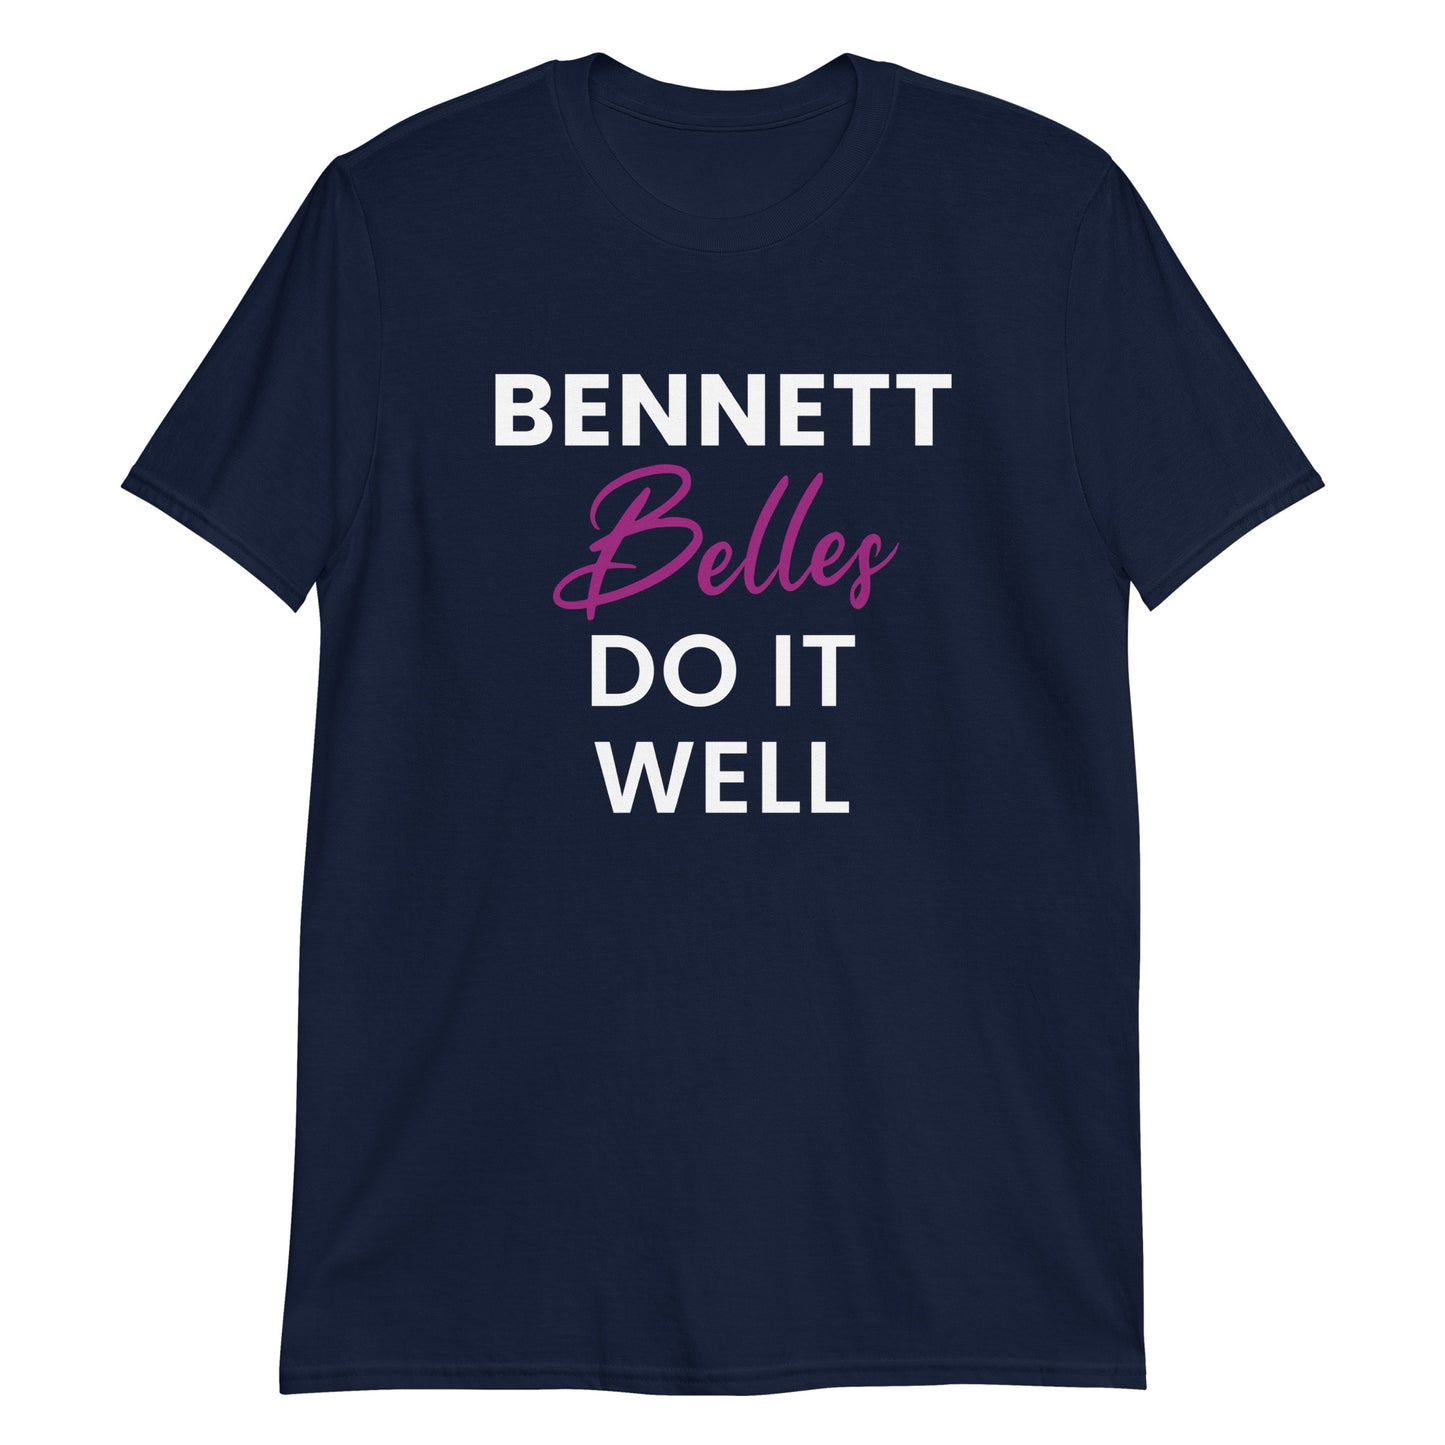 Bennett Belles Do It Well - Pink Letter Short-Sleeve Unisex T-Shirt